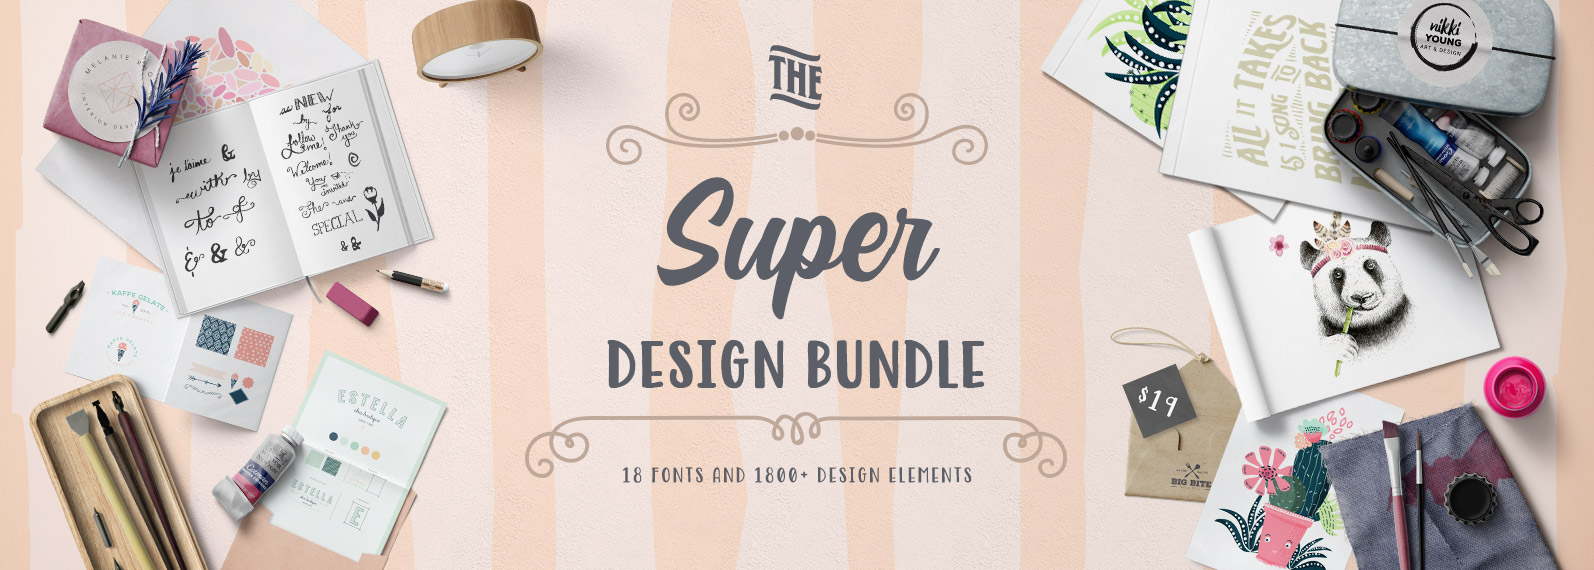 The Super Design Bundle Cover